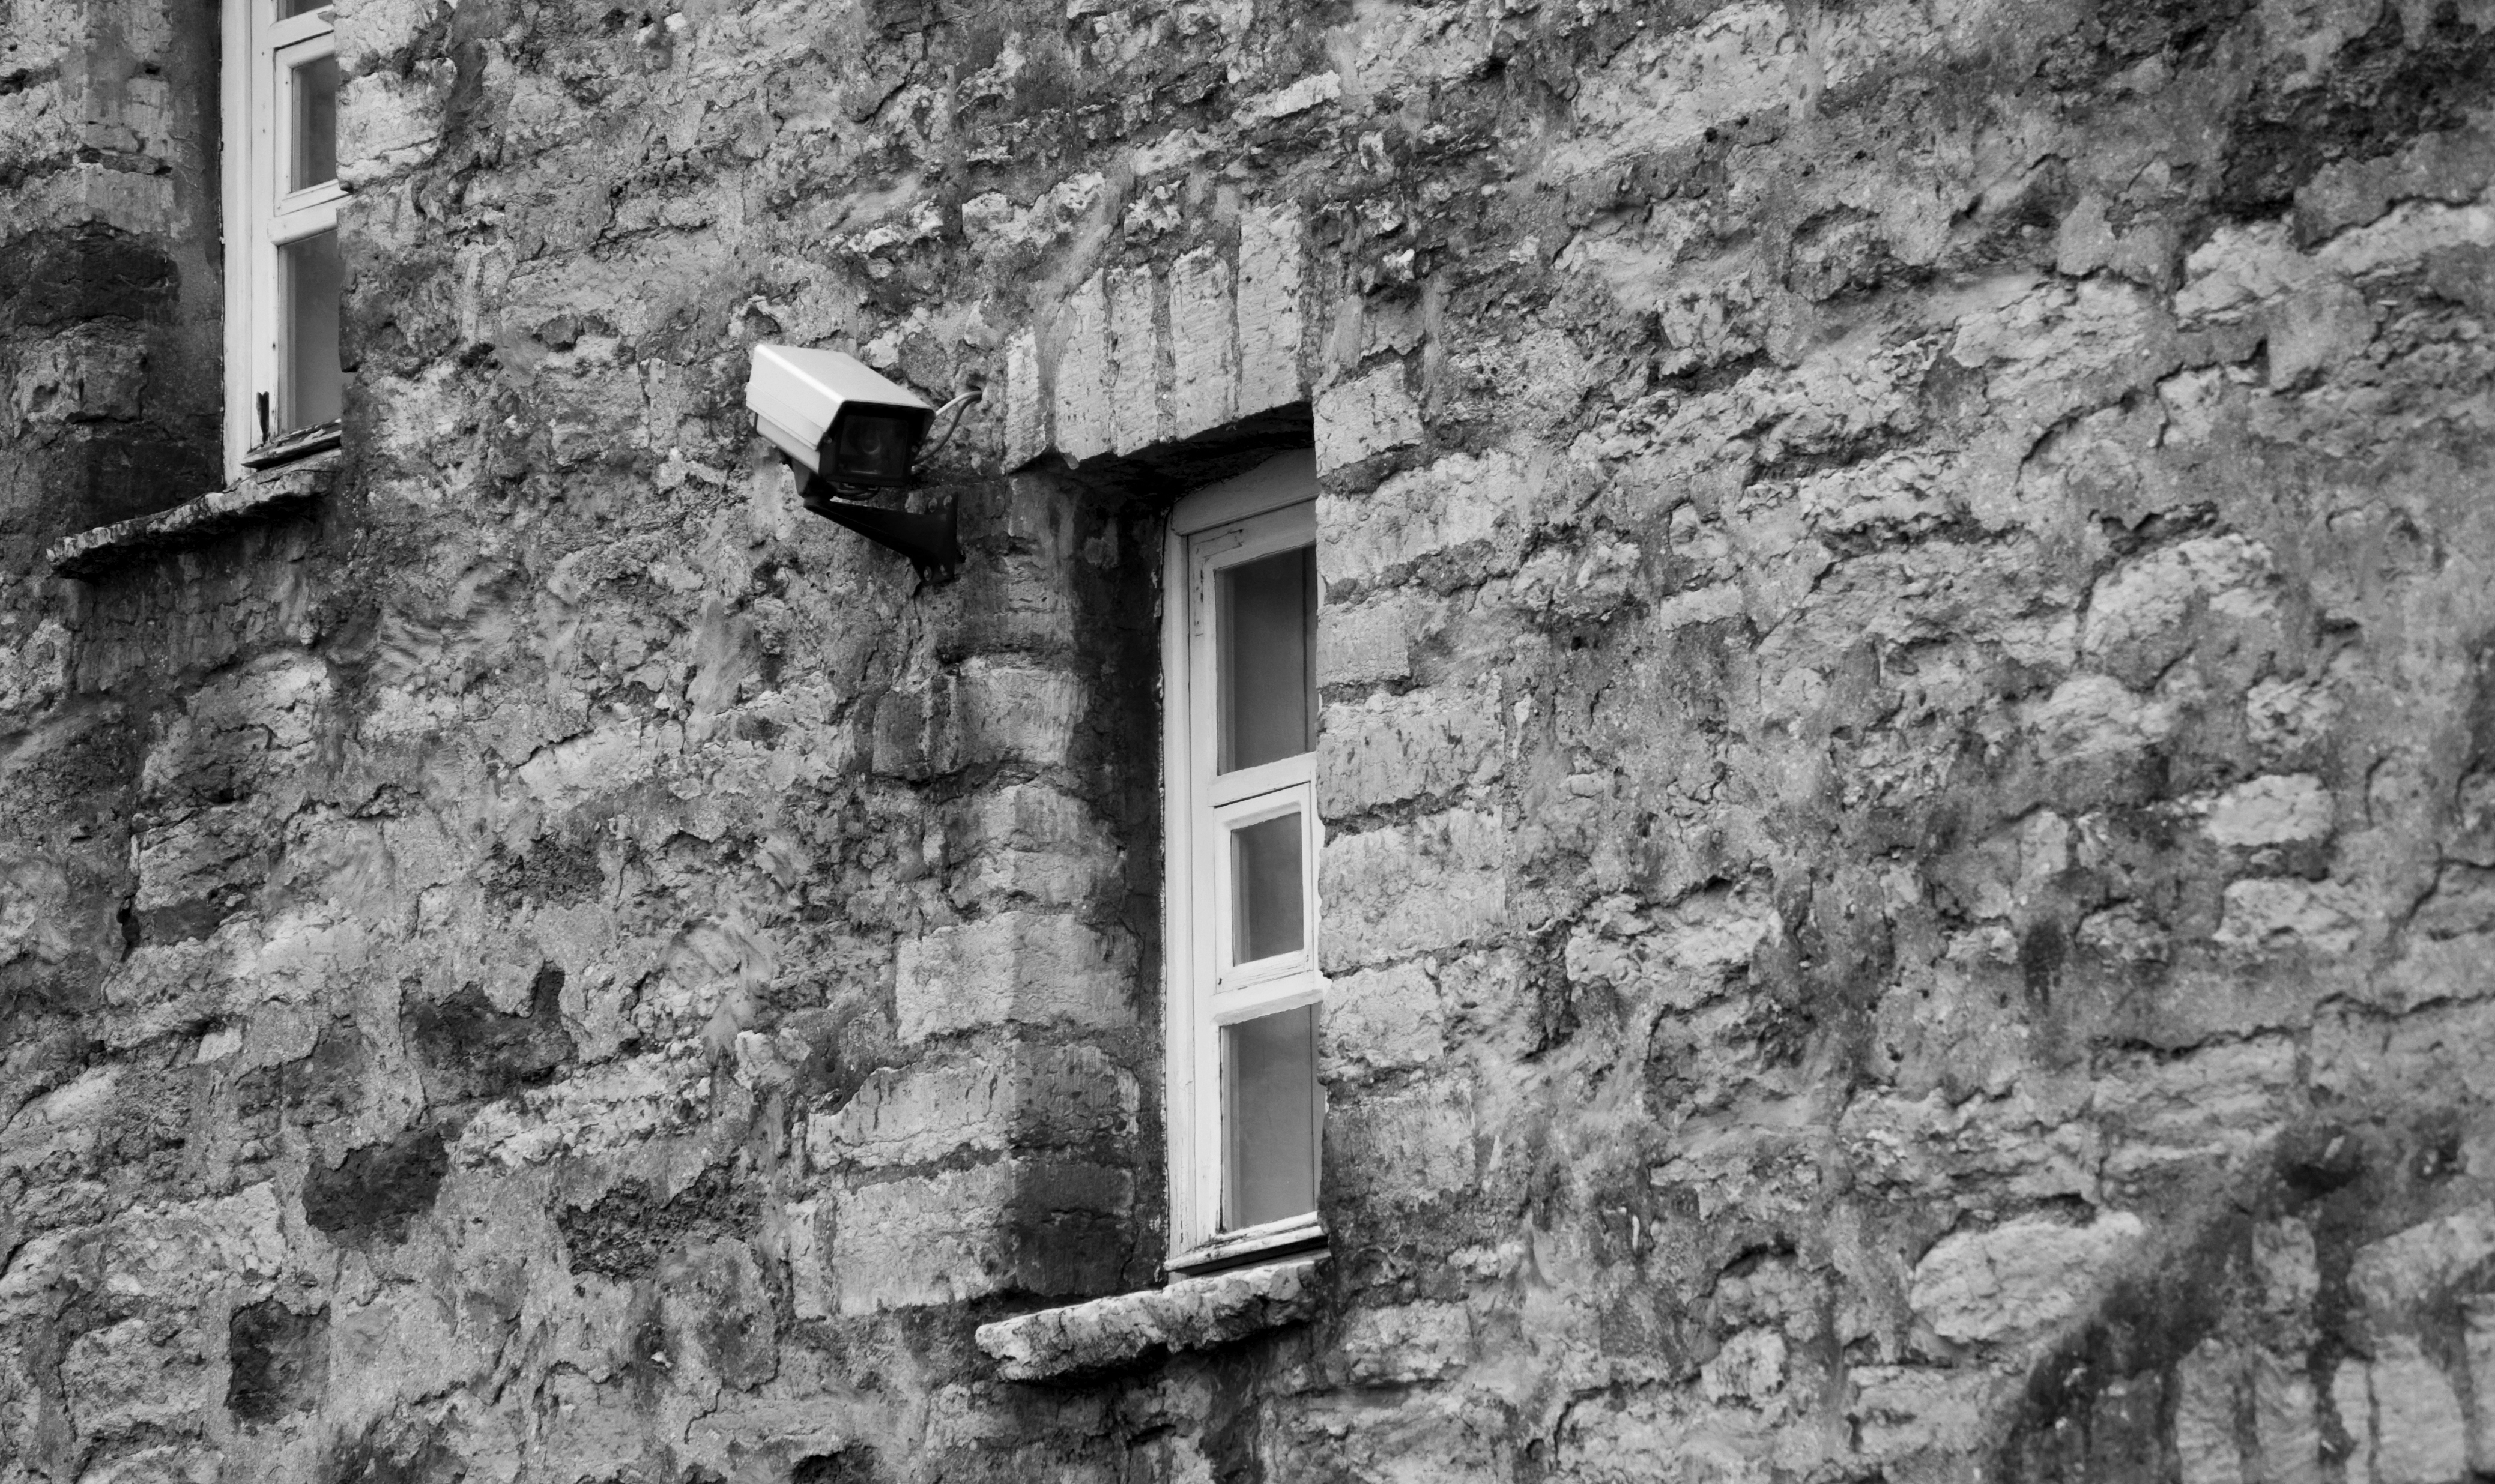 Estonian CCTV in Old Town 4891307424